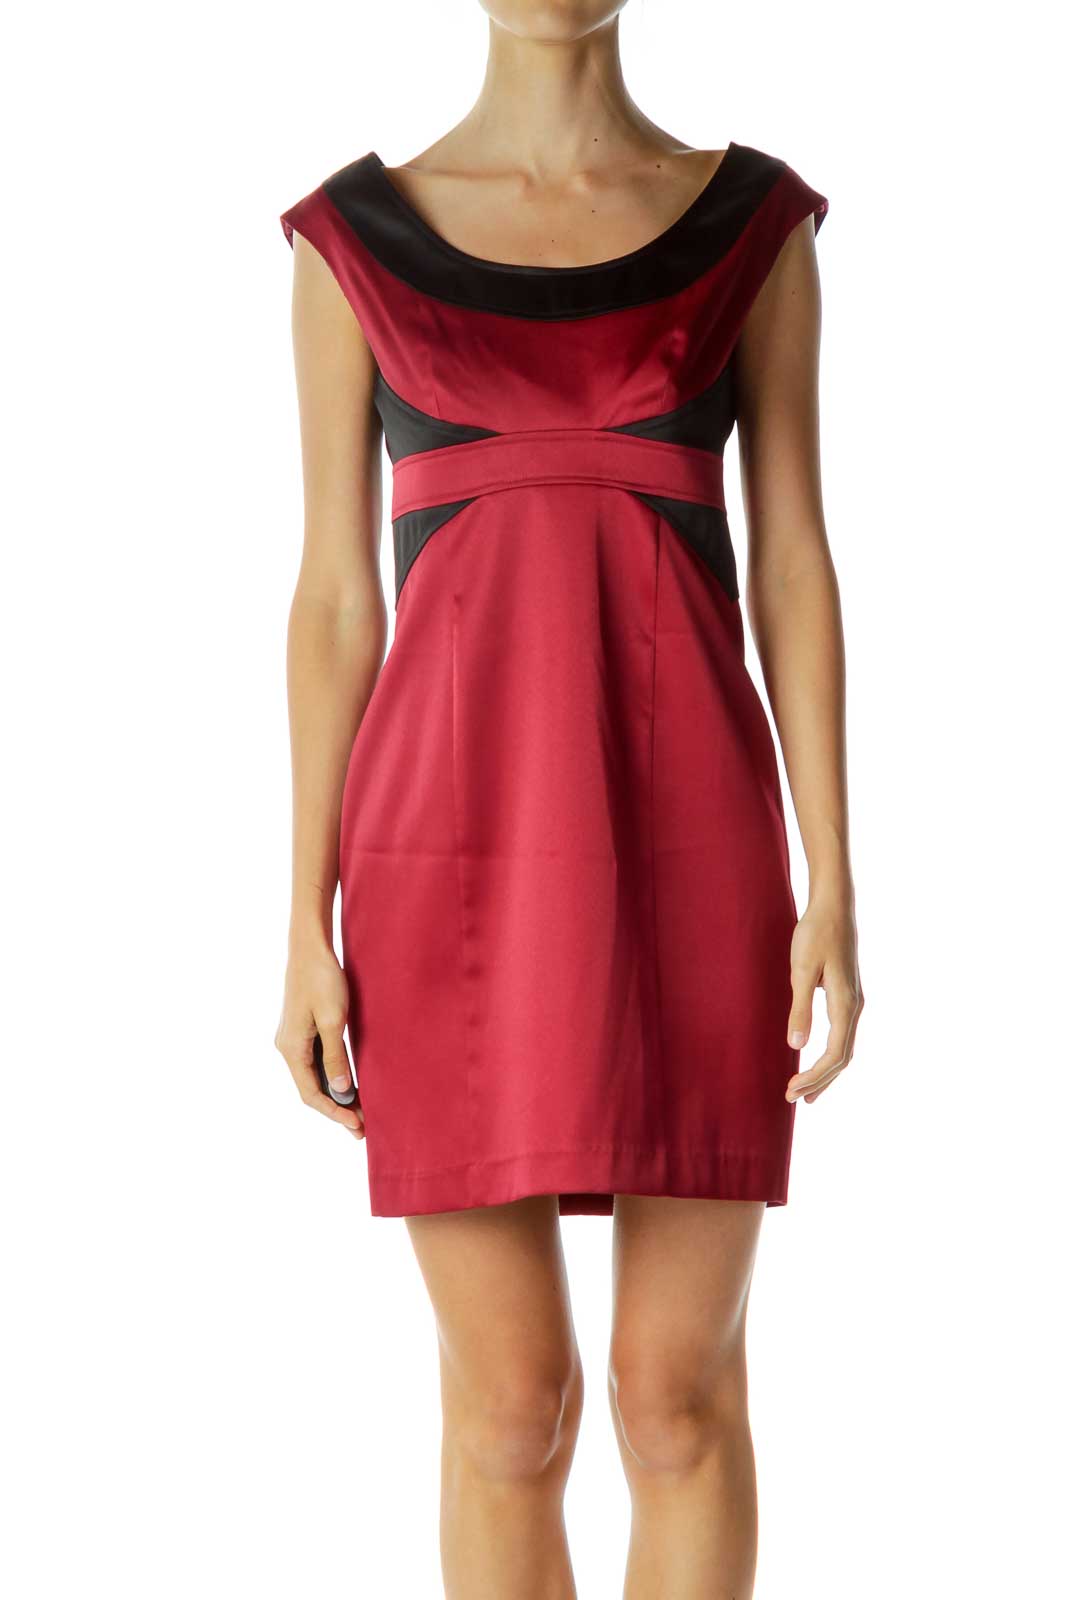 London Times - Red Black Sheath Dress Polyester Spandex | SilkRoll